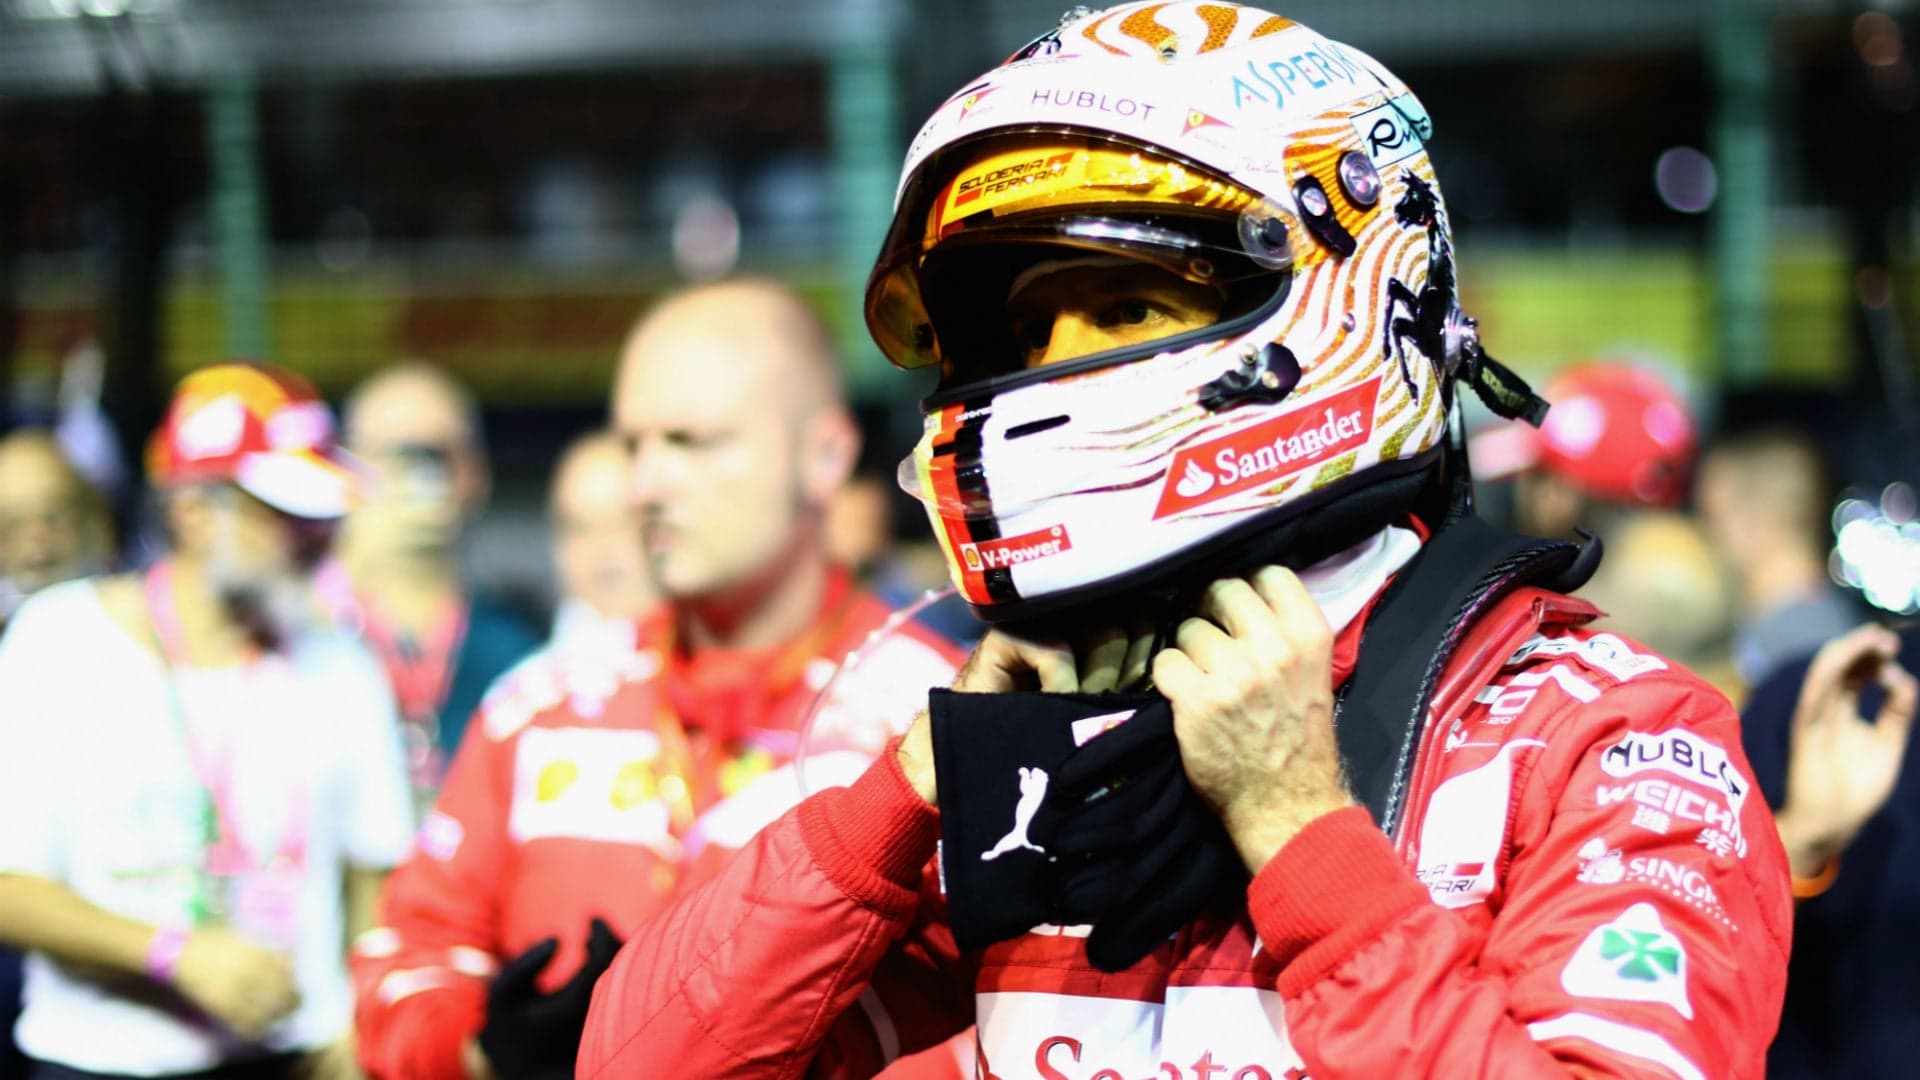 Surprise: Everyone Blames Vettel for Singapore GP Crash